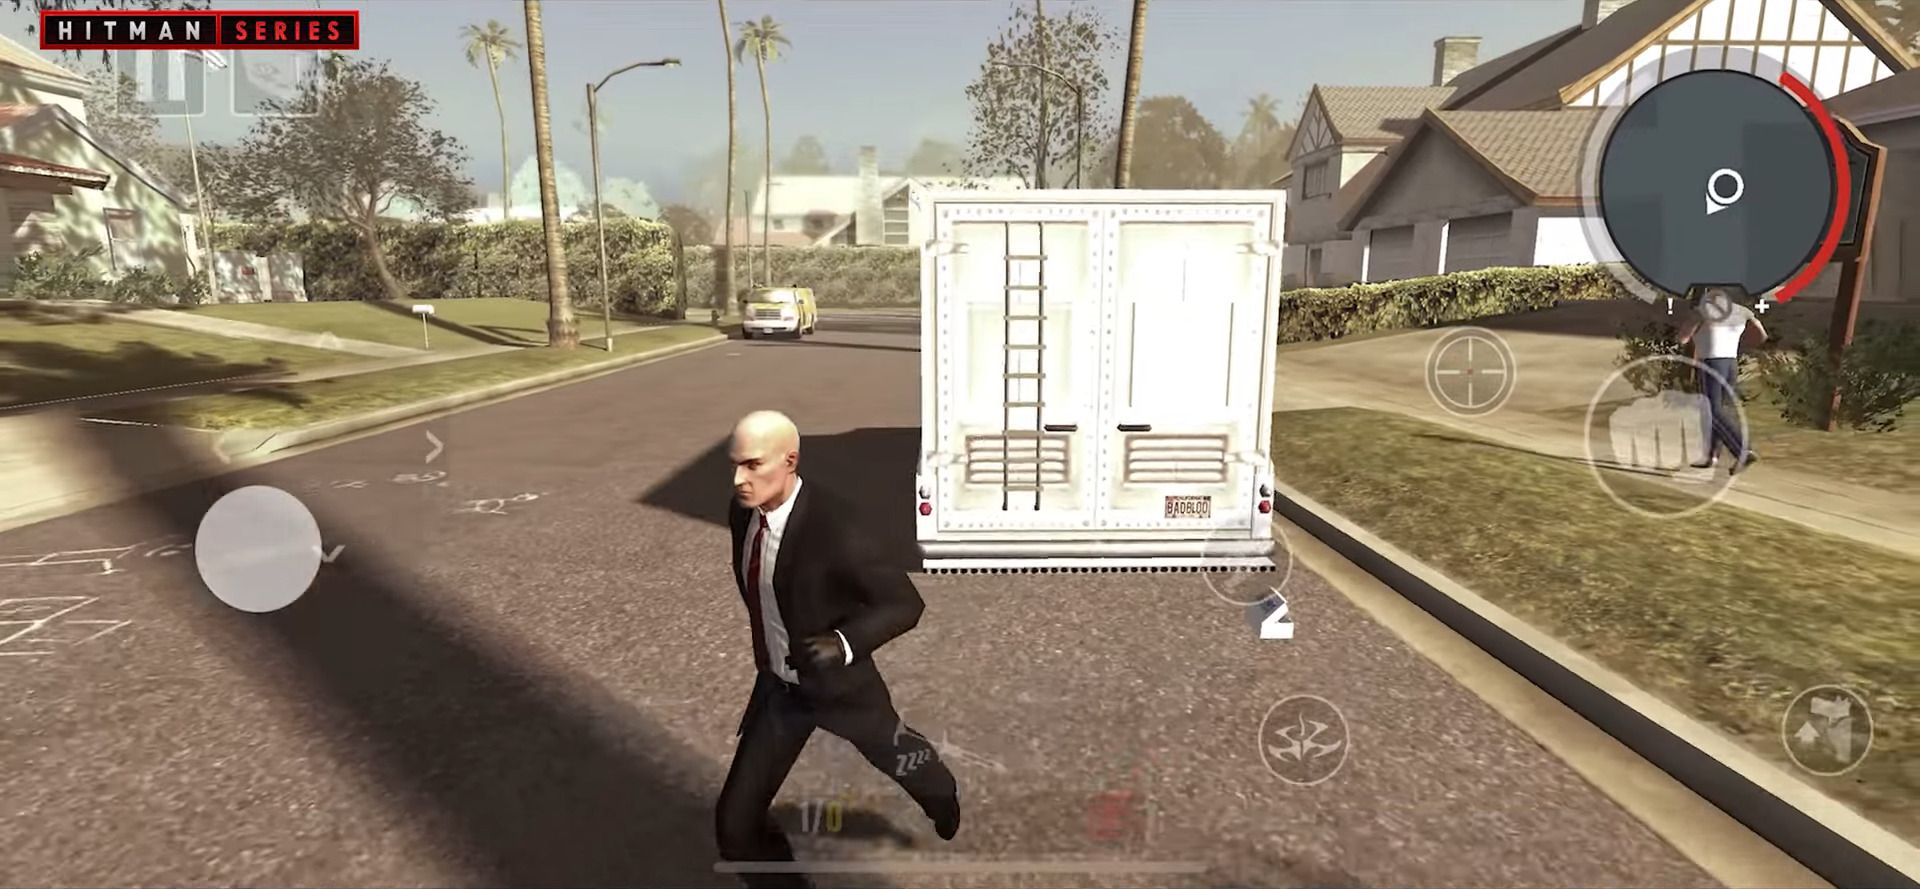 Hitman: Blood Money — Reprisal - Android game screenshots.